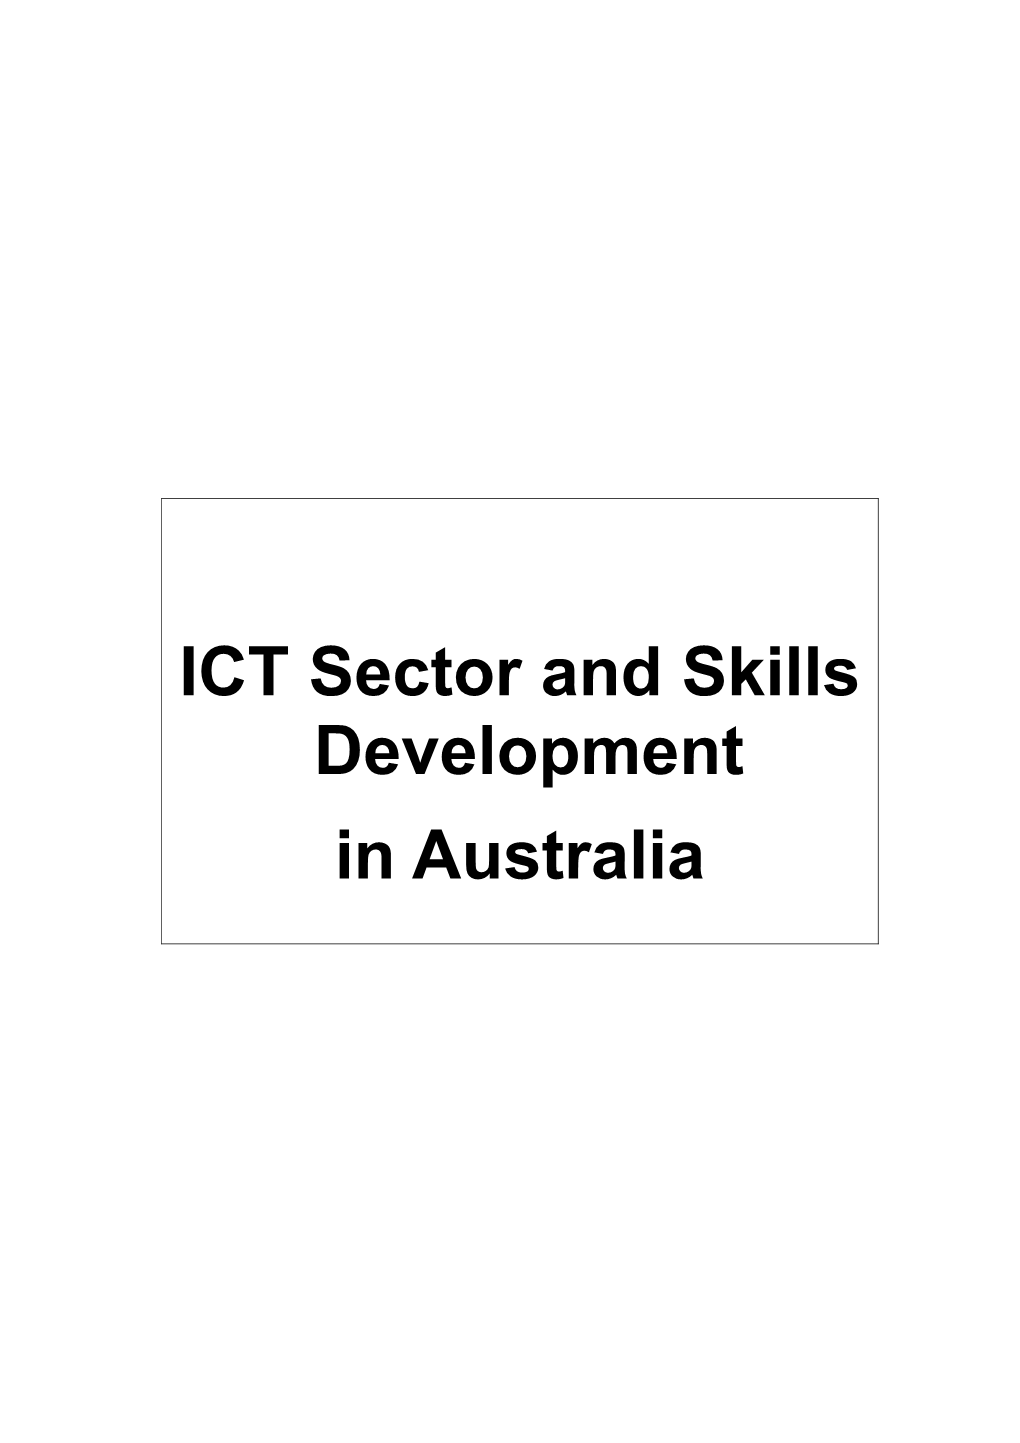 Trends in the ICT Sector in Australia